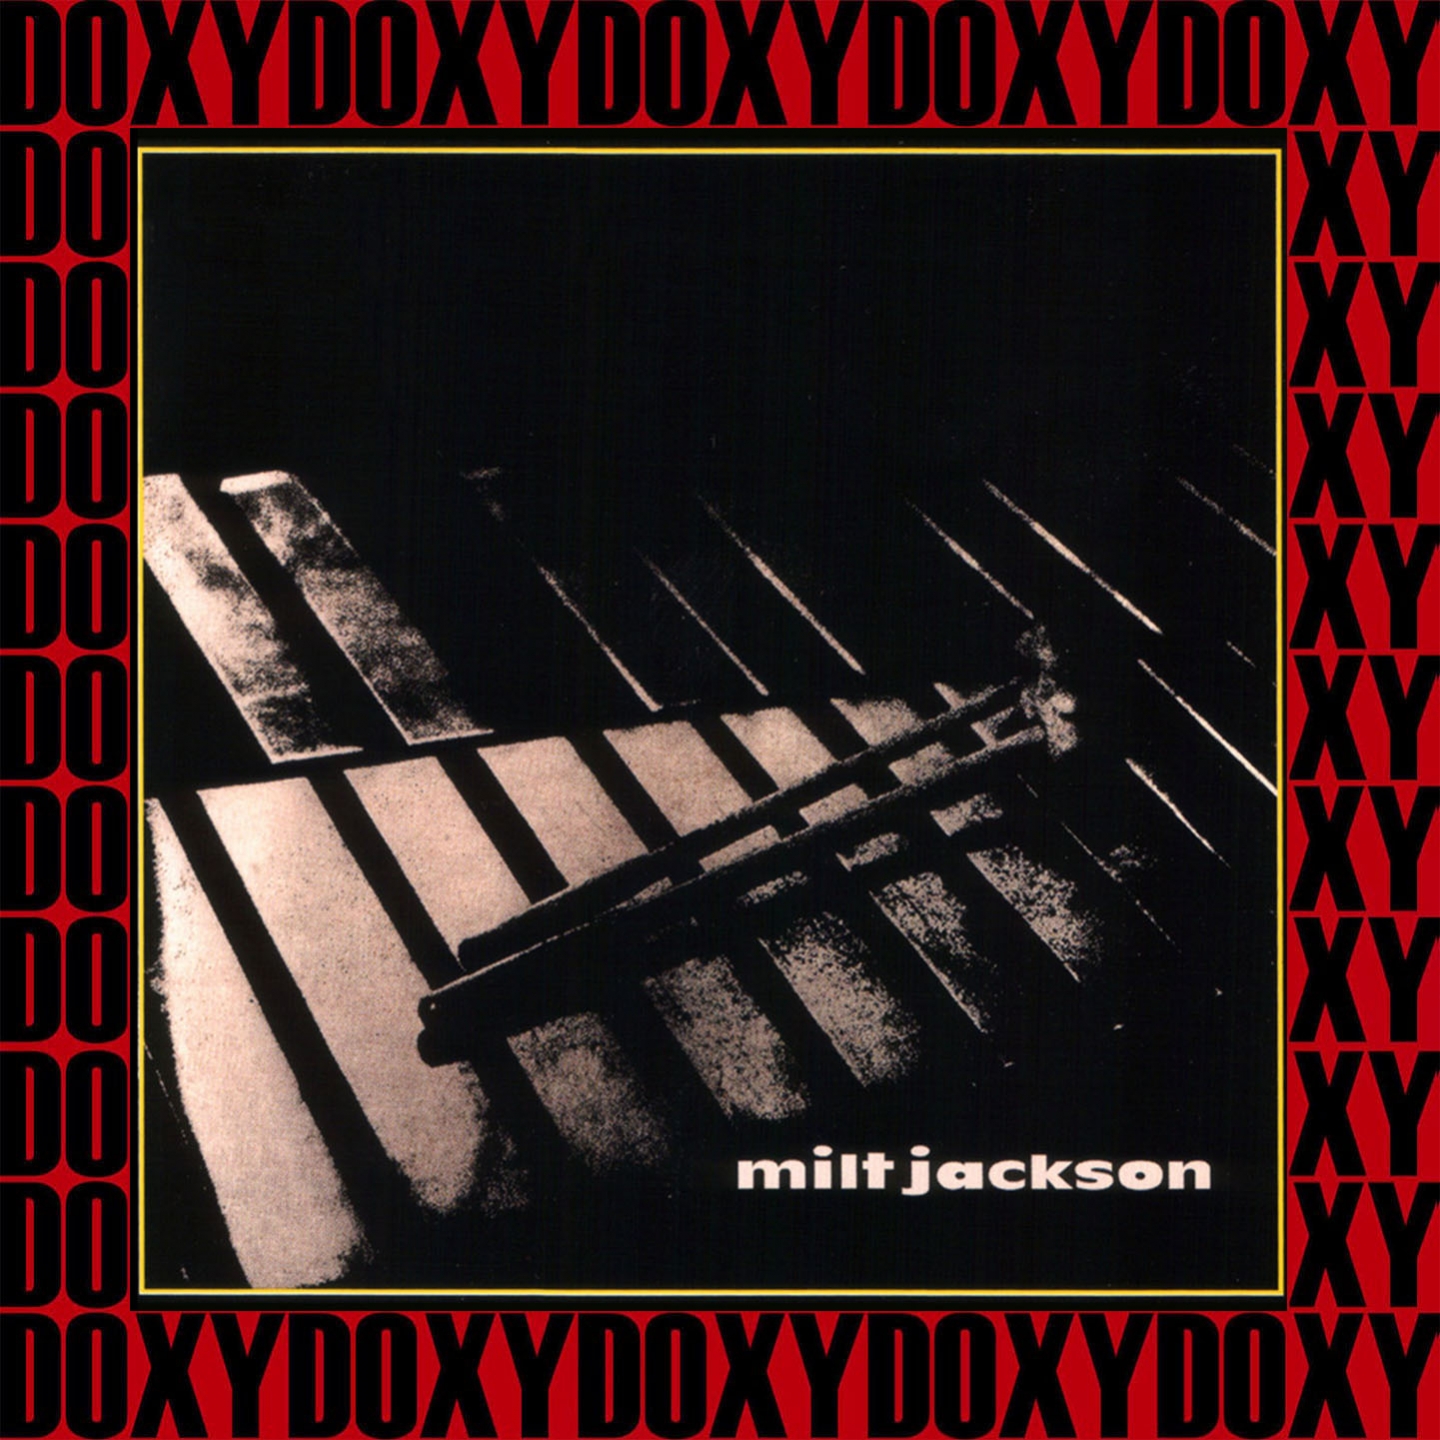 Milt Jackson Quartet (Remastered Version) (Doxy Collection)